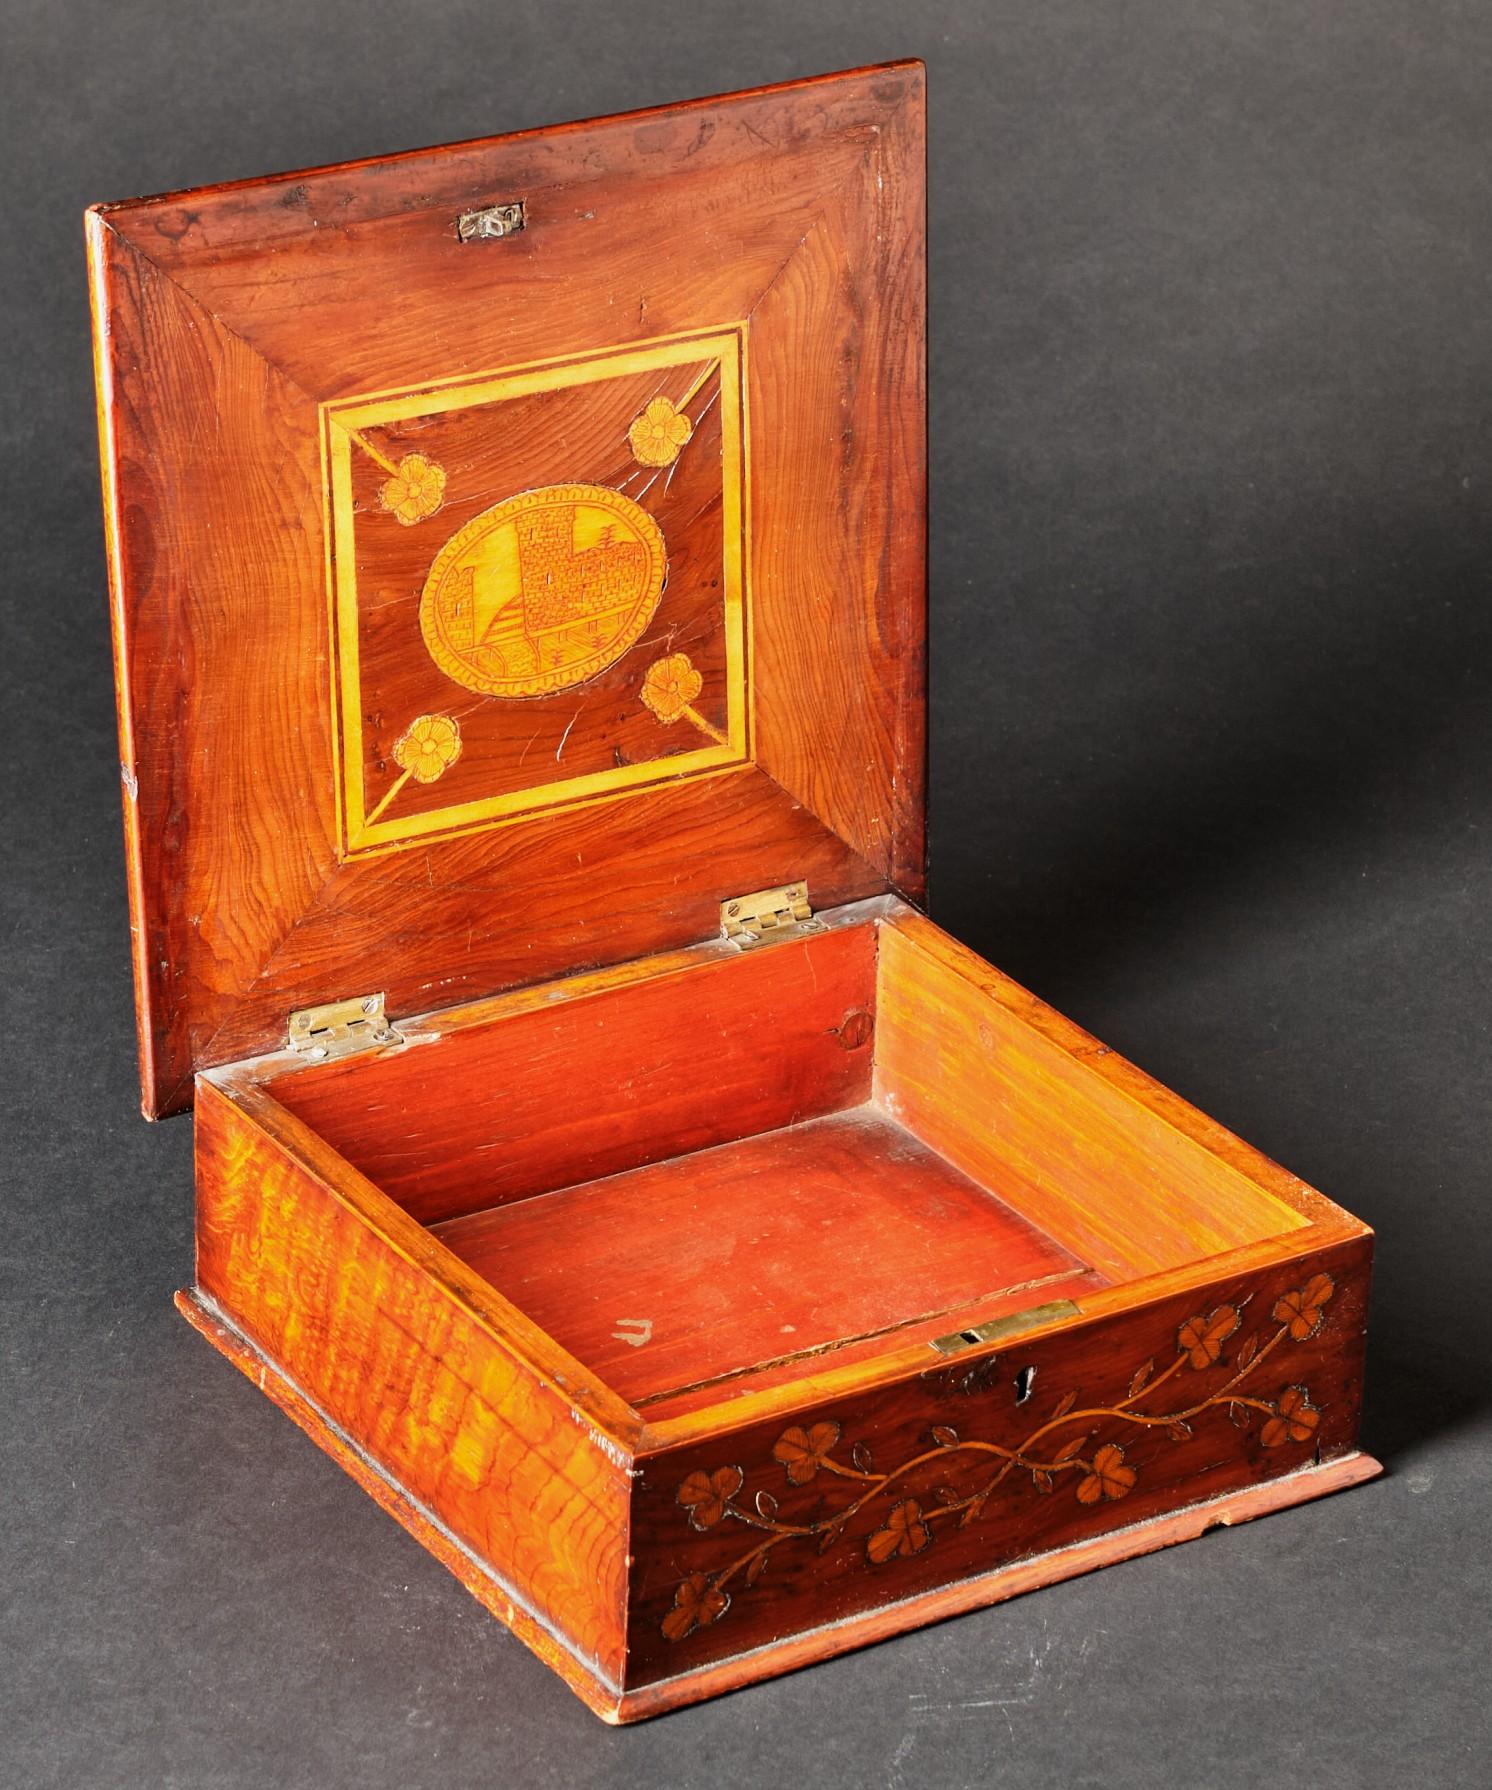 Hand-Crafted A Very Good 19th Century Killarney Ware Dresser Box, Ireland Circa 1870 For Sale